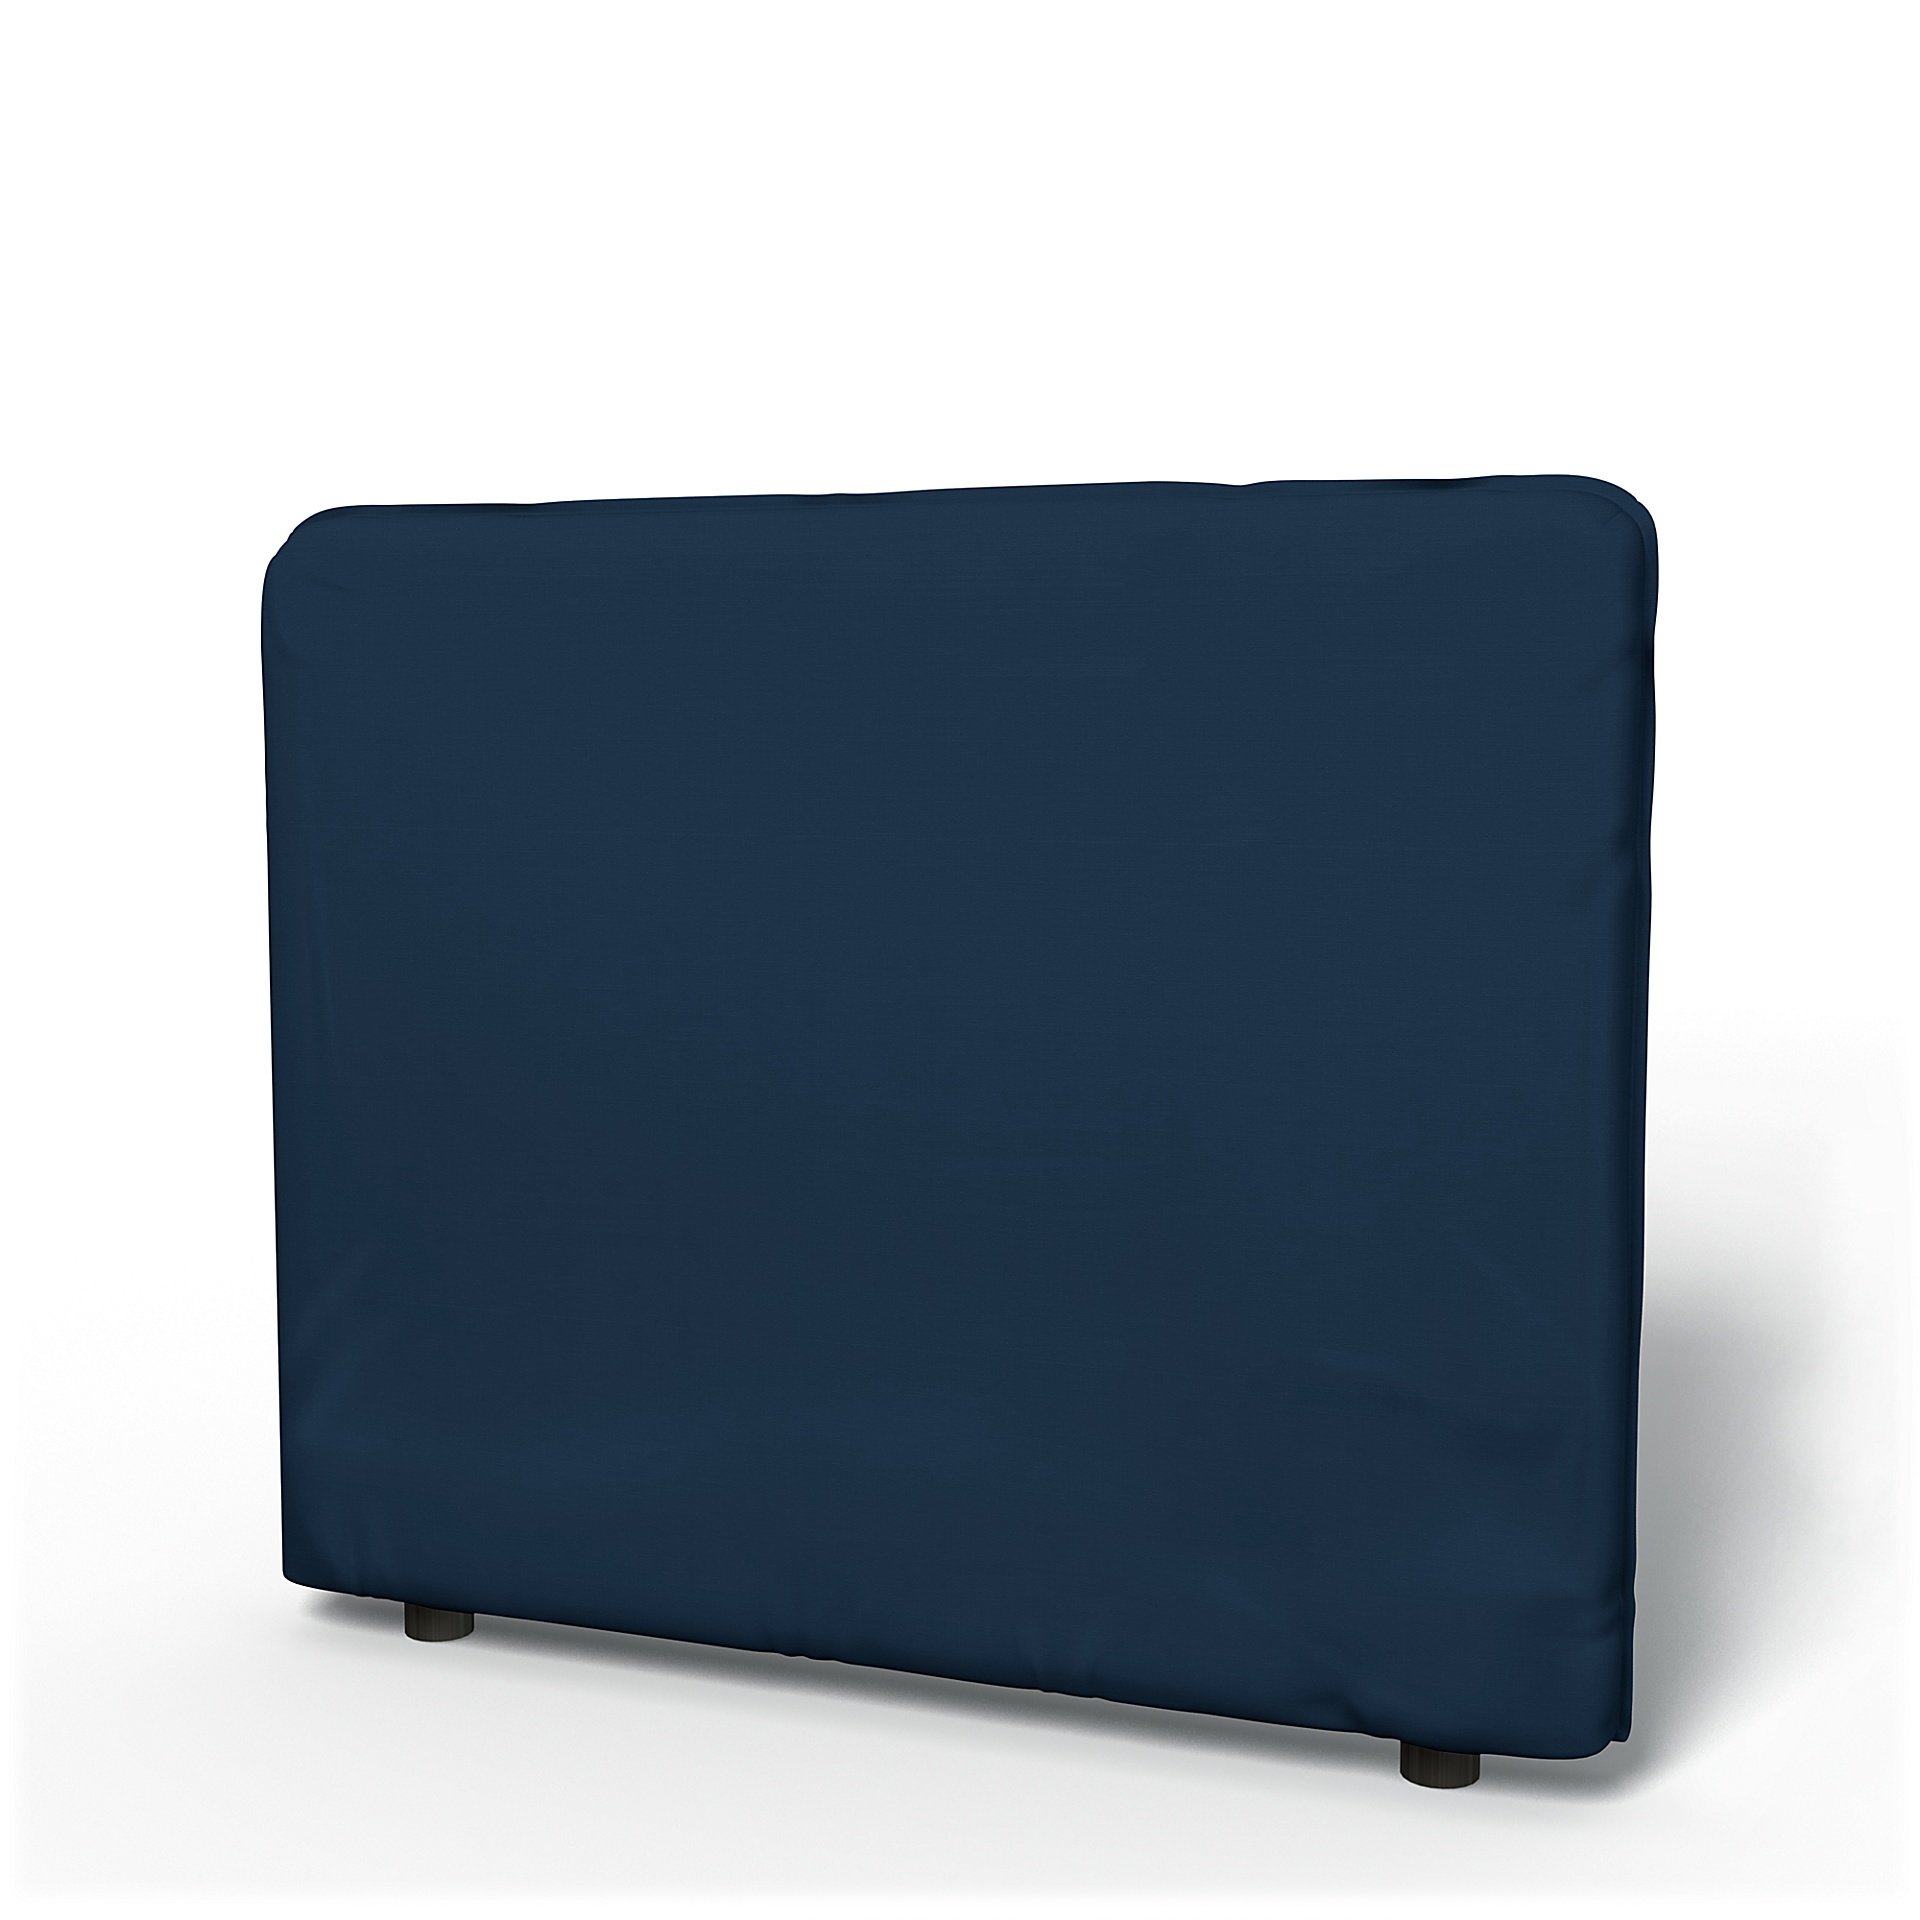 IKEA - Vallentuna Low Backrest Cover 100x80cm 39x32in, Deep Navy Blue, Cotton - Bemz